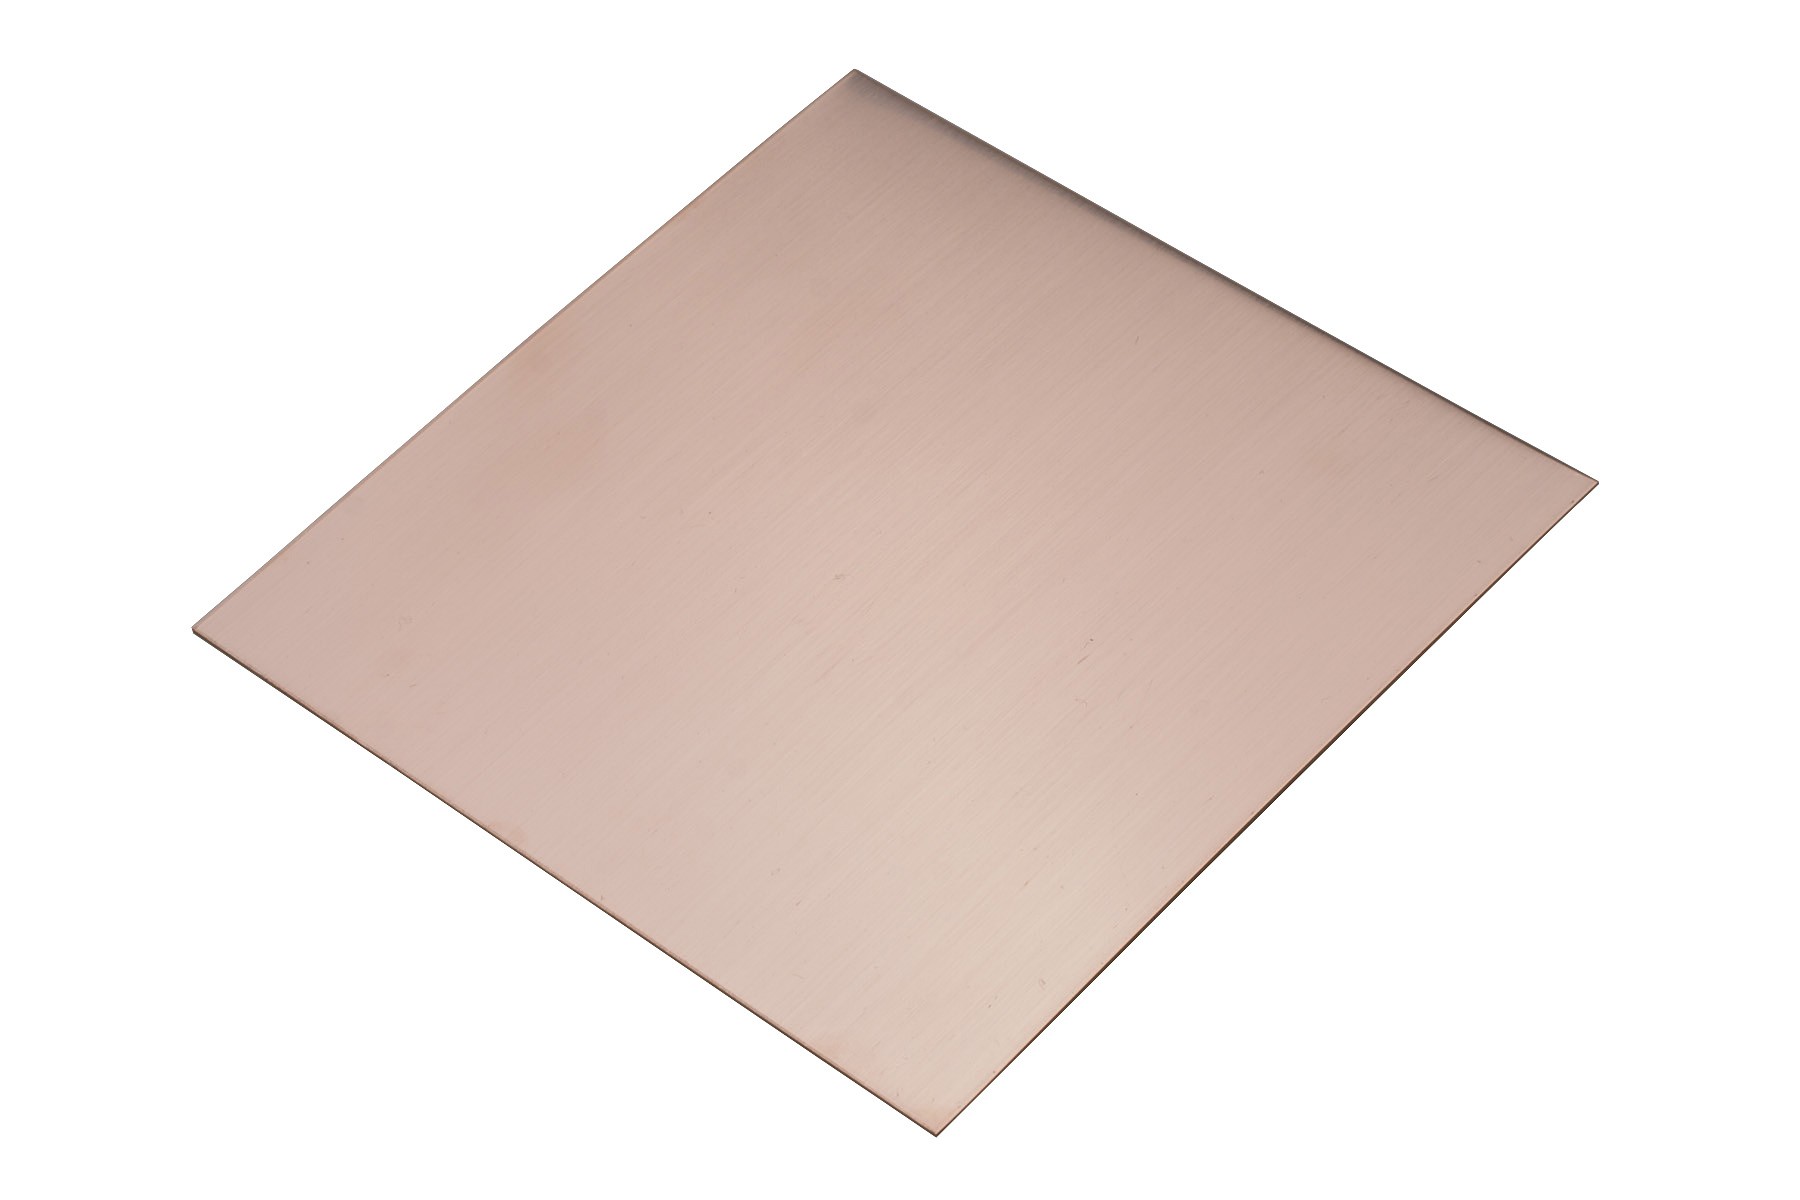 6" x 6" Copper Sheet - 18 Gauge